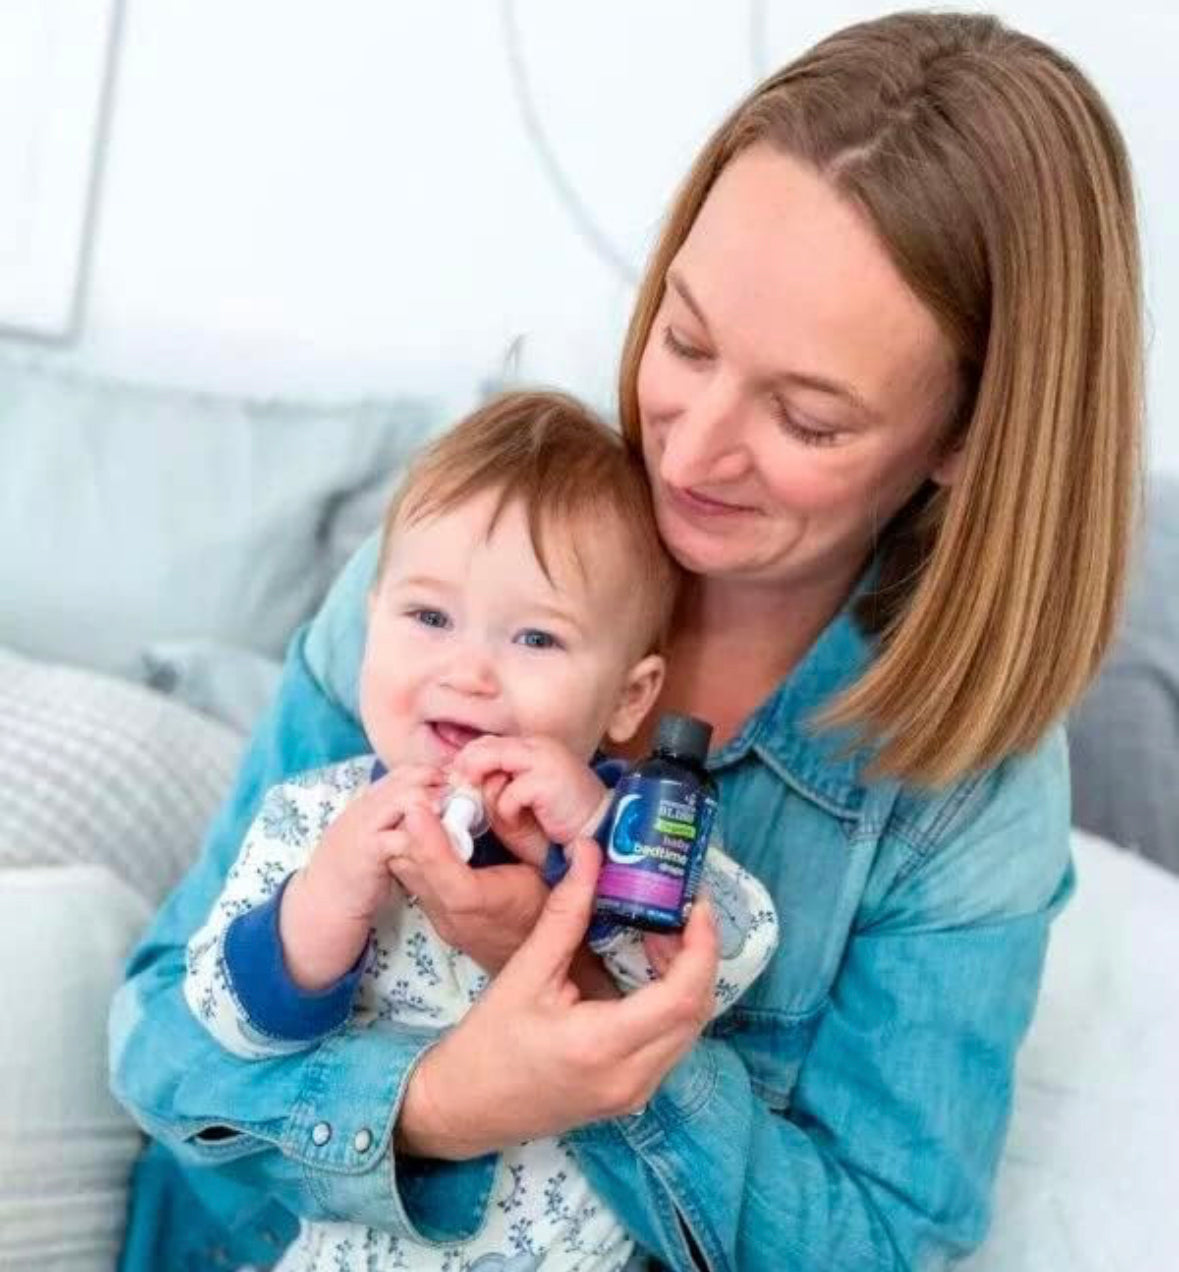 Mommy's Bliss Organic Baby Bedtime Drops + Overnight Immunity Support Promotes Restful Night, Melatonin Free, Age 4 Month+, 2 Fl Oz.